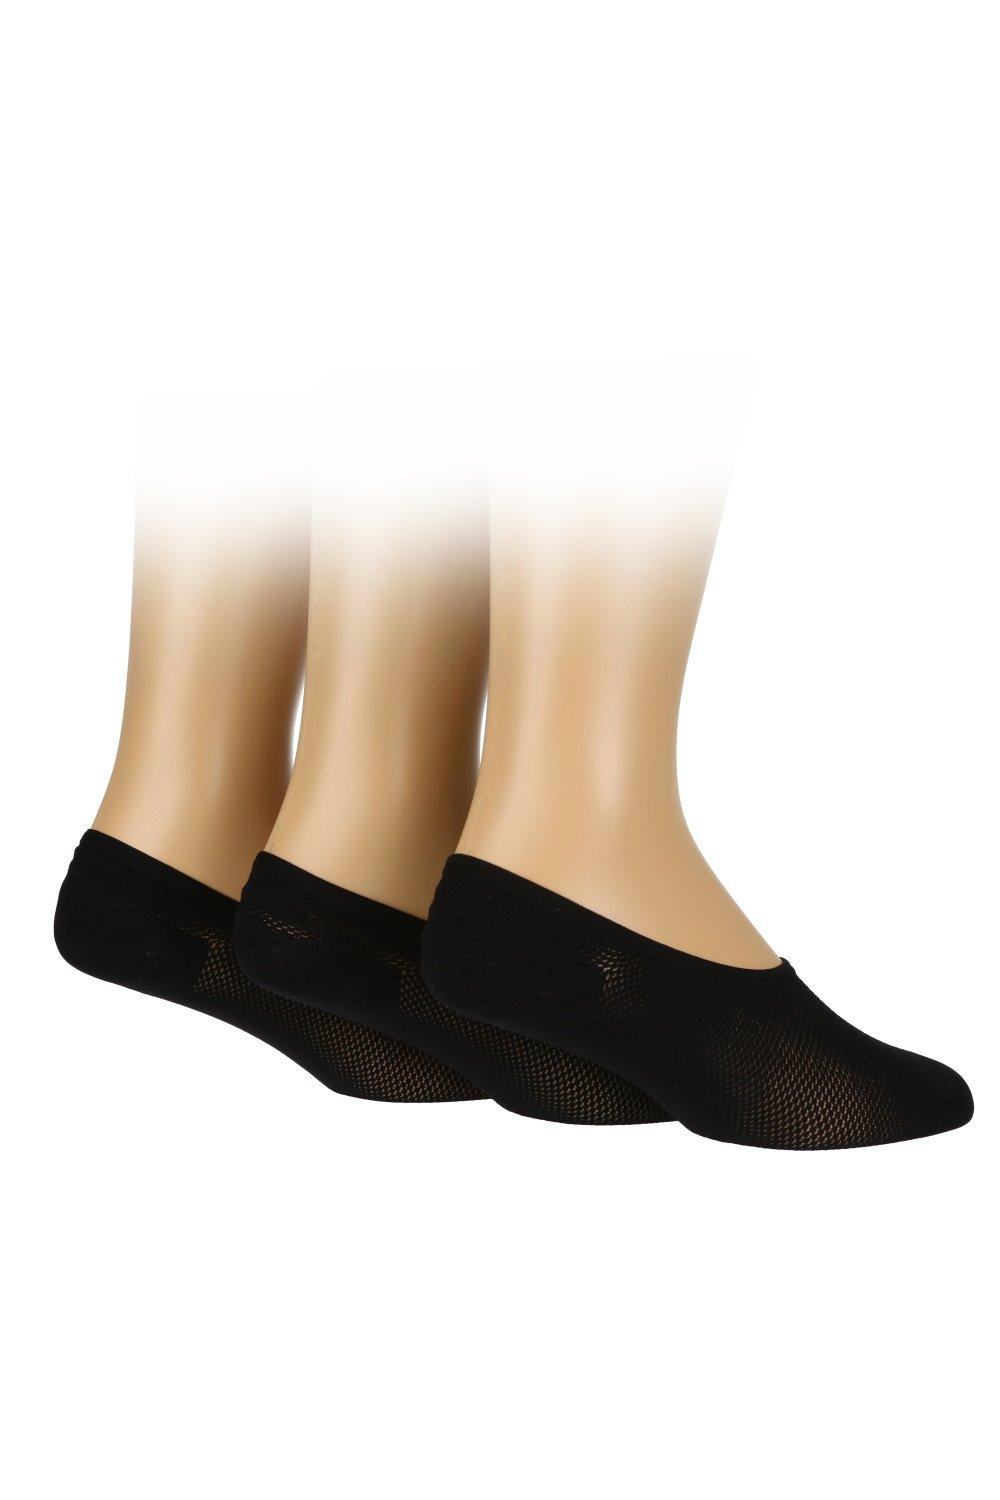 3 Pair Pack Mesh Shoe Liner Socks